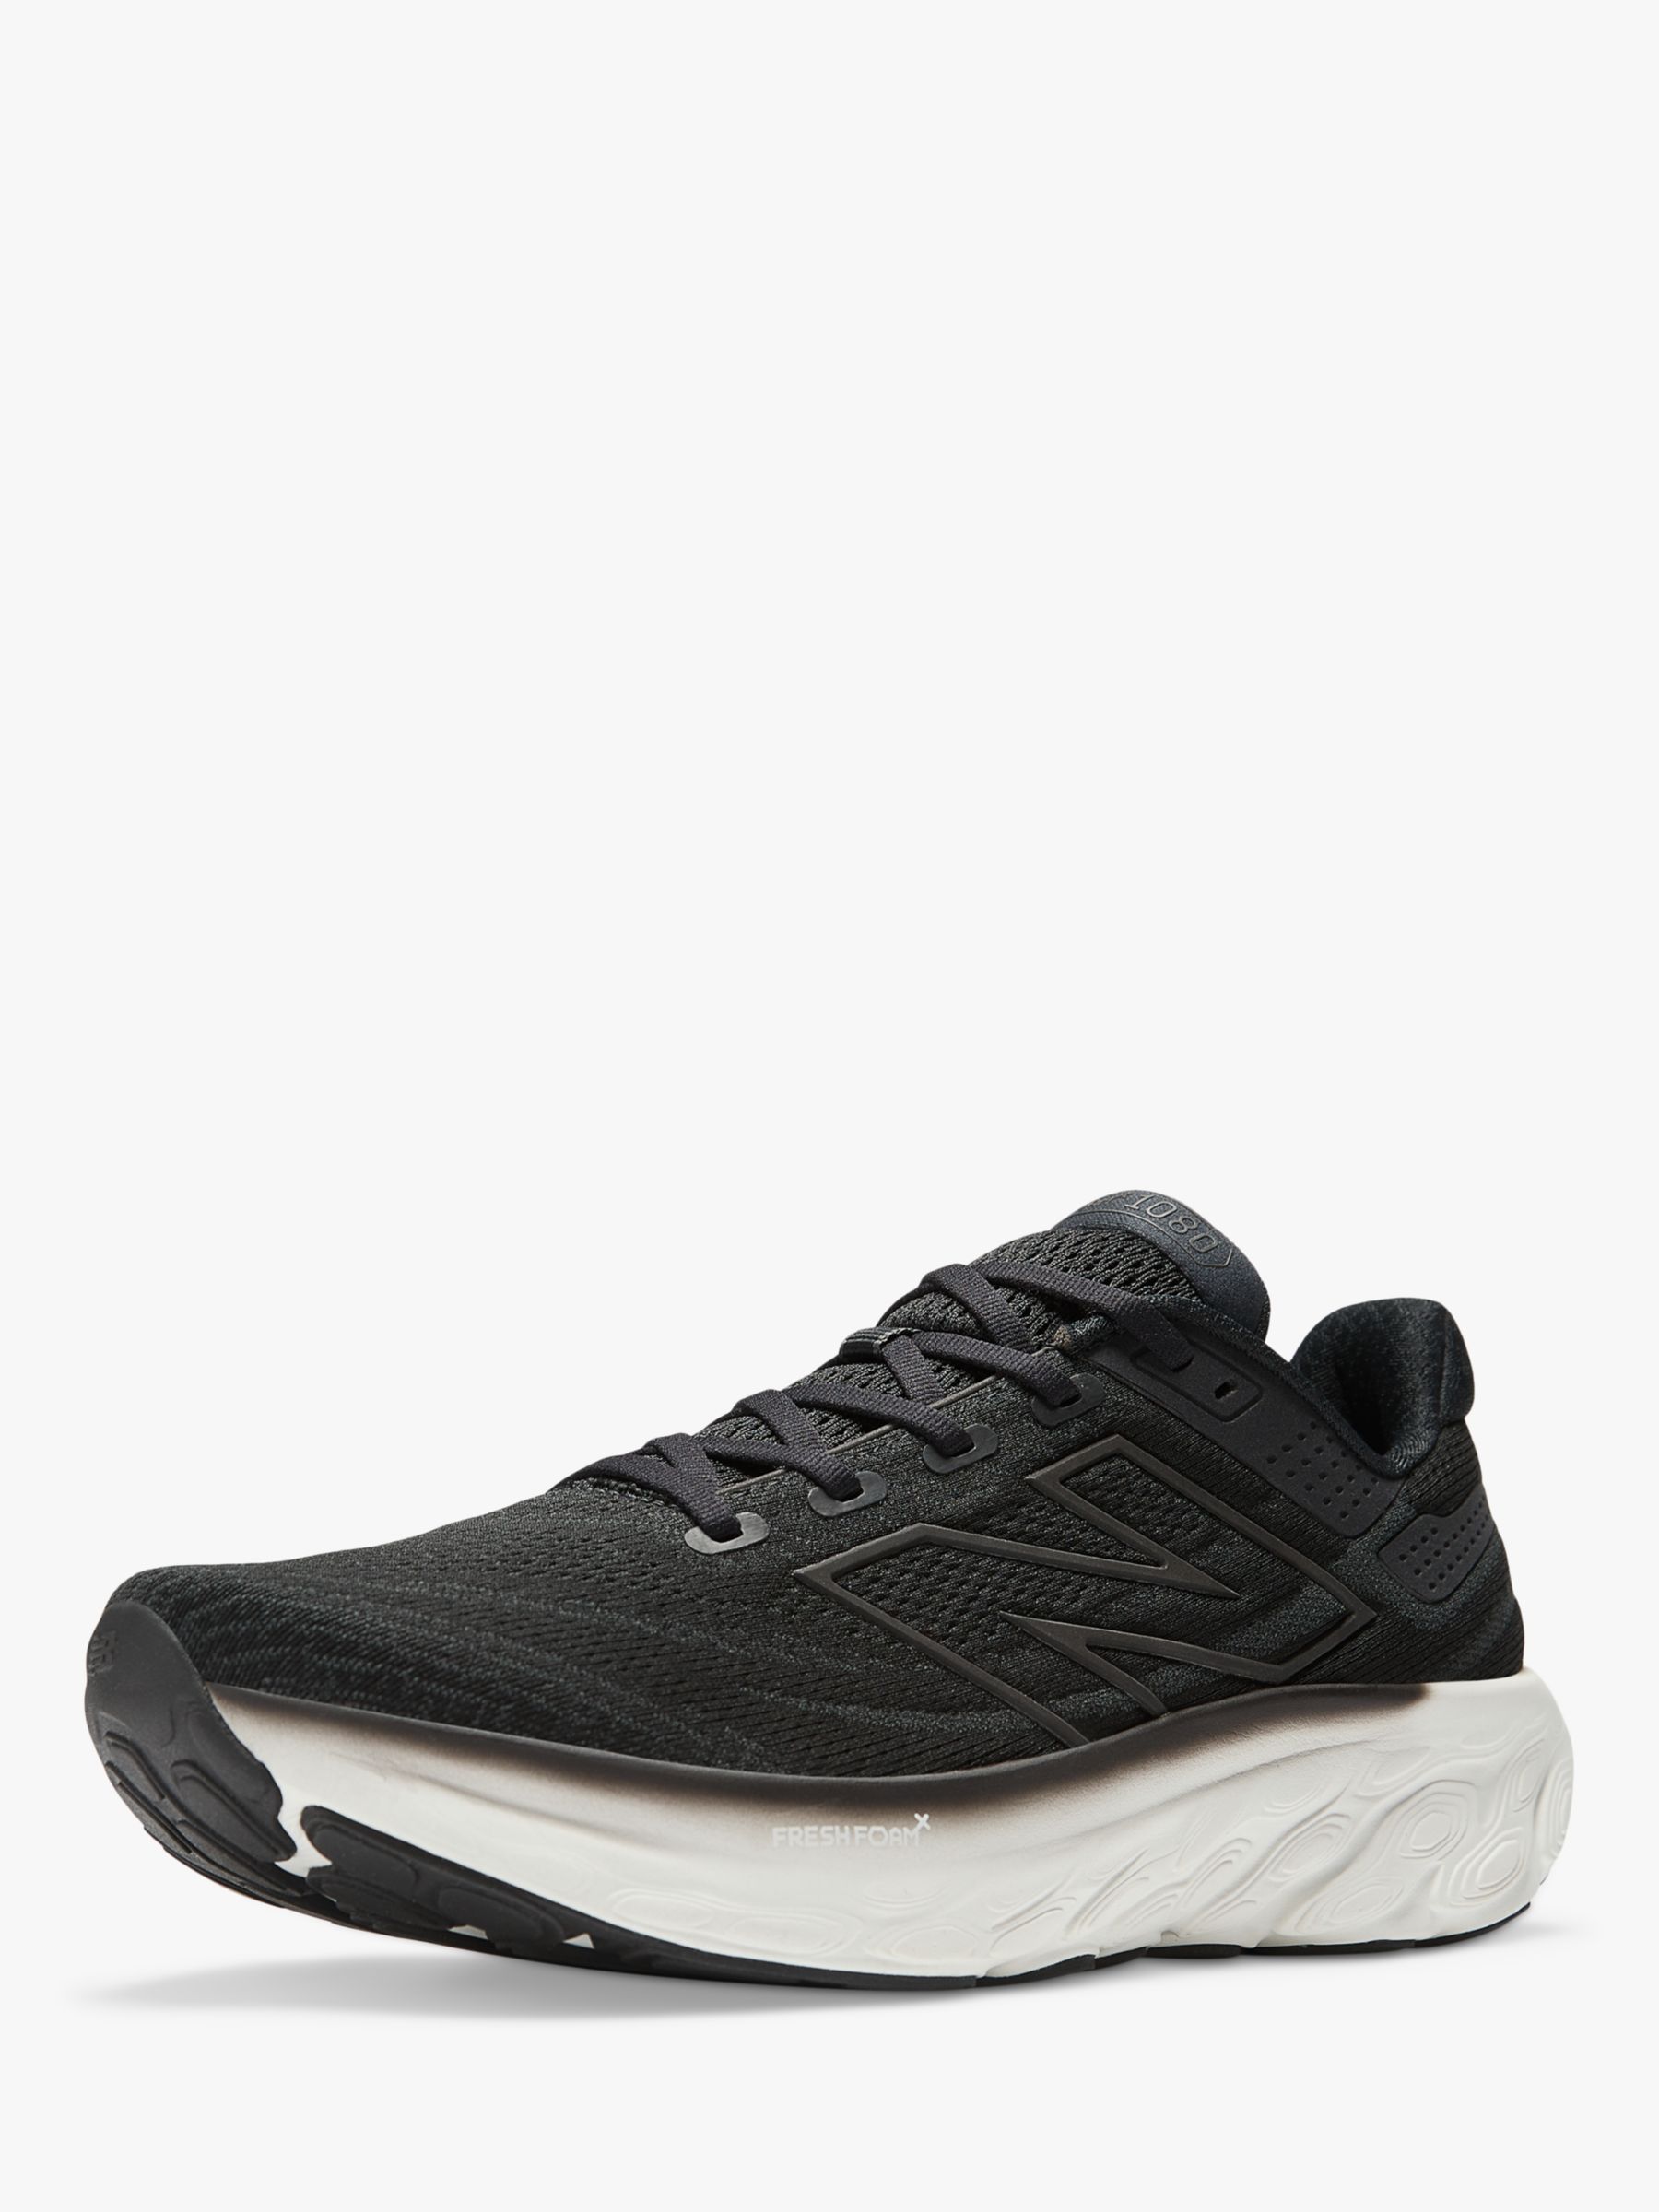 New Balance Fresh Foam X 1080v13 Men's Running Shoes, Black/White at ...